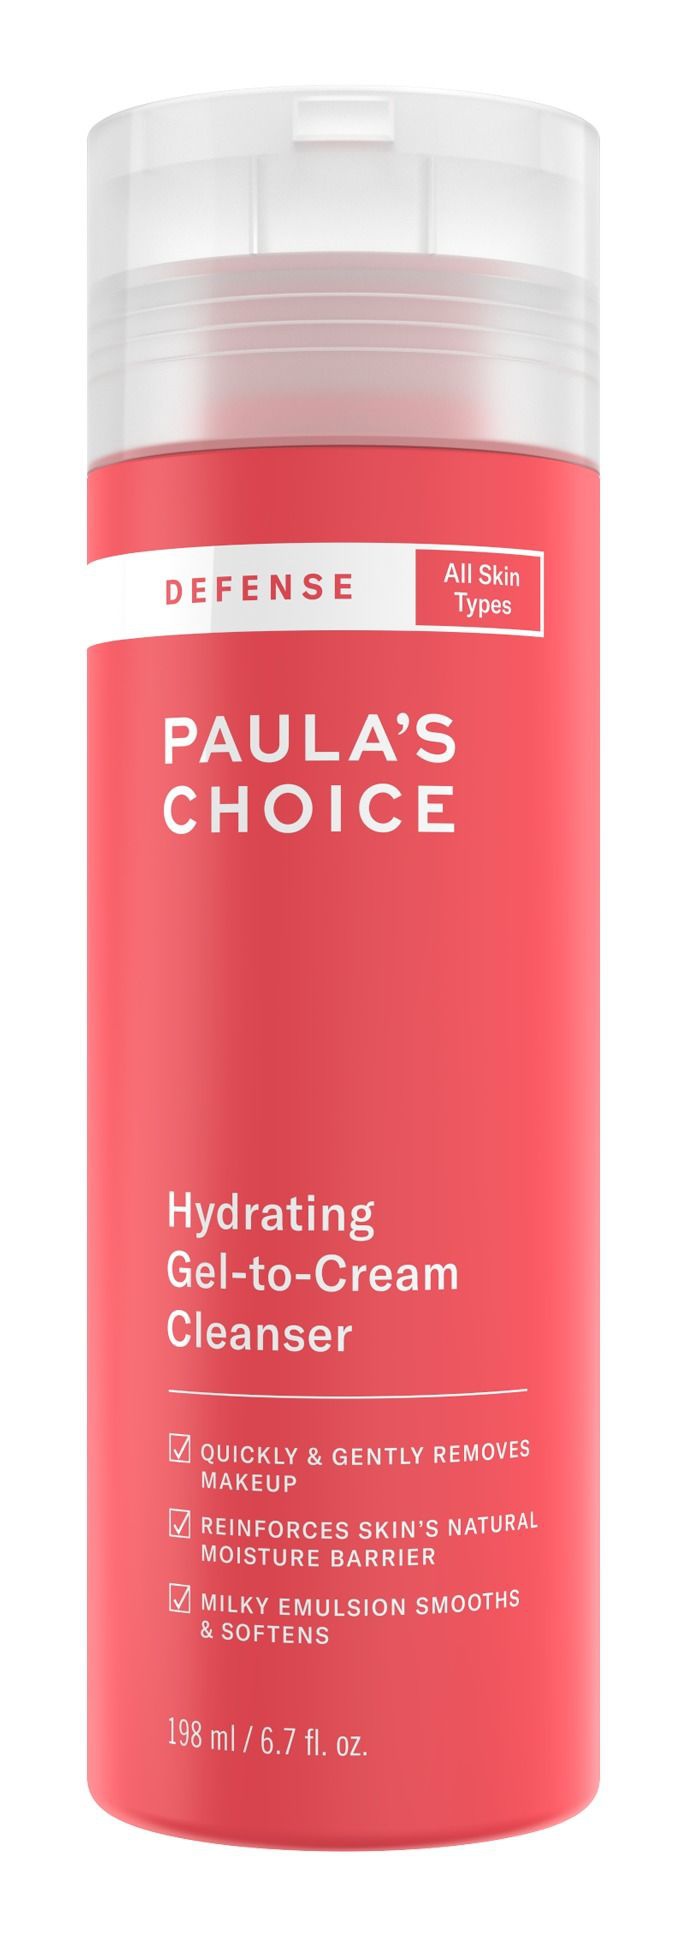 Paula's Choice Defense Hydrating Gel-To-Cream Cleanser